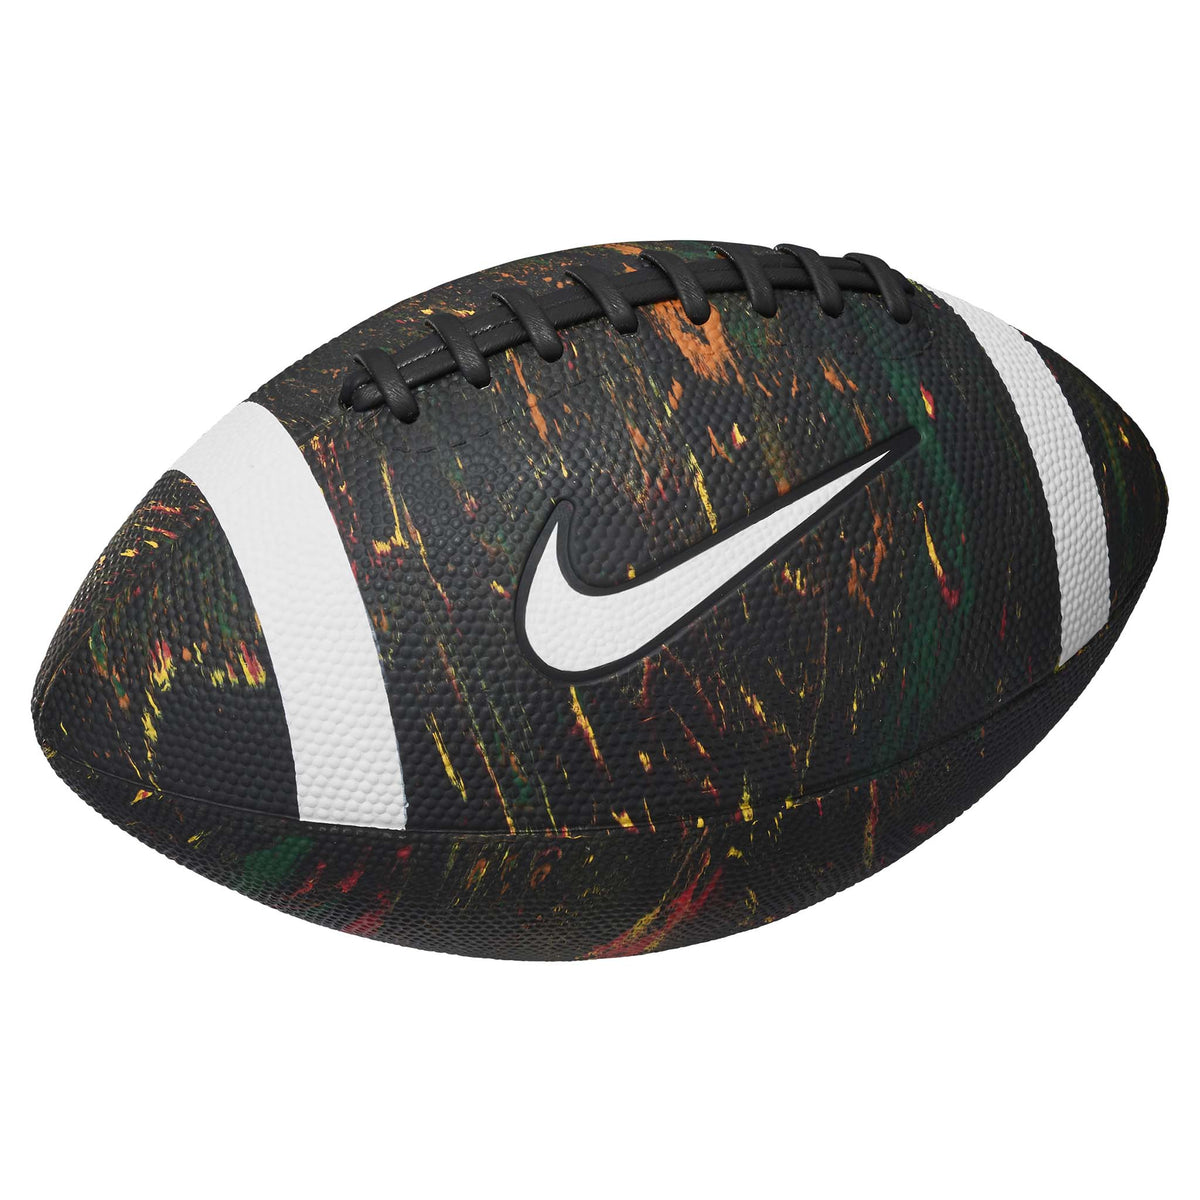 Nike Playground FB ballon de football américain multi noir blanc